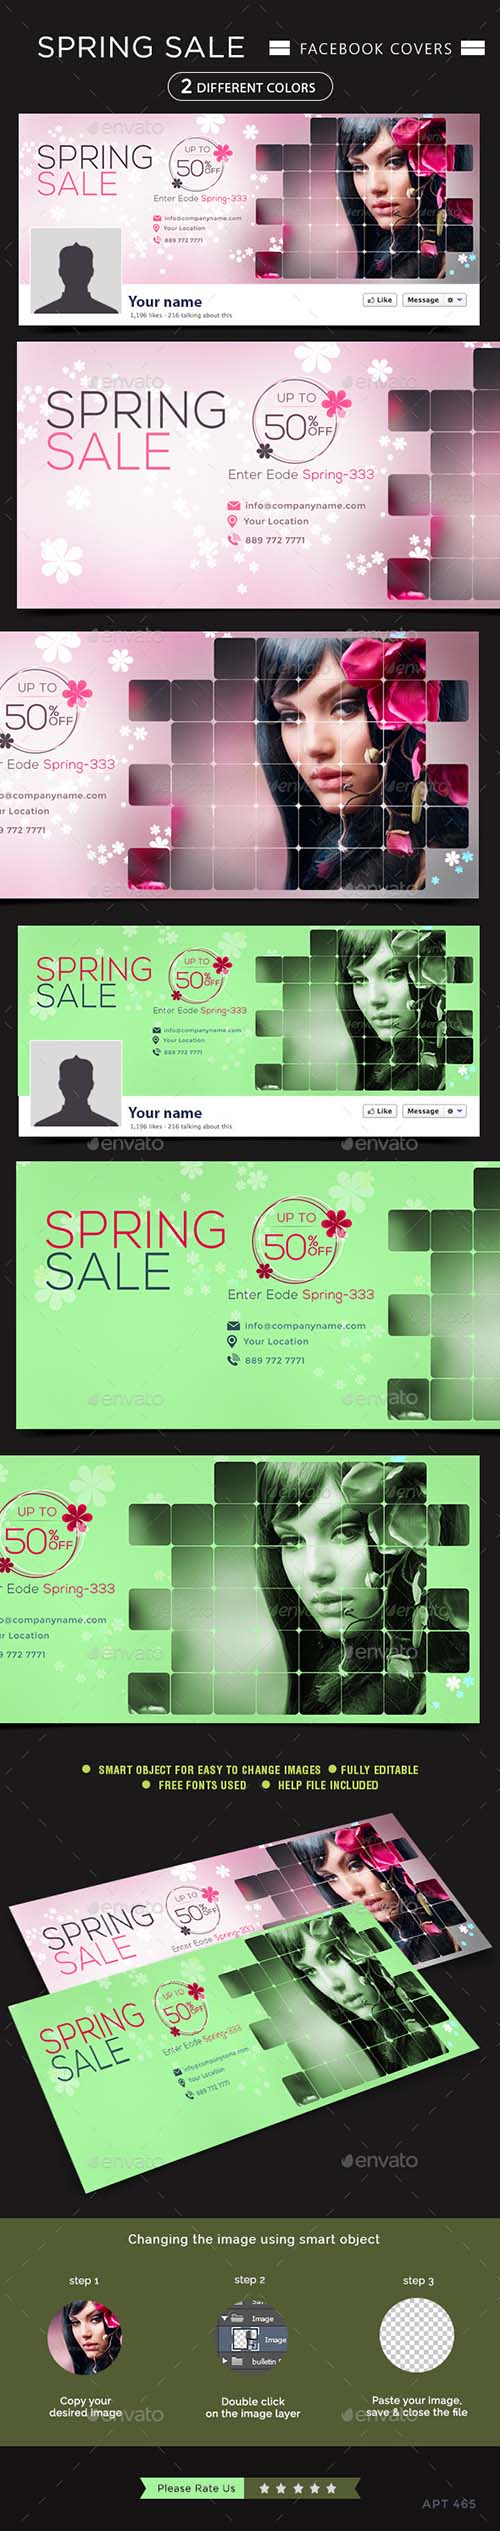 GraphicRiver - Spring Sale Facebook Cover 10706283